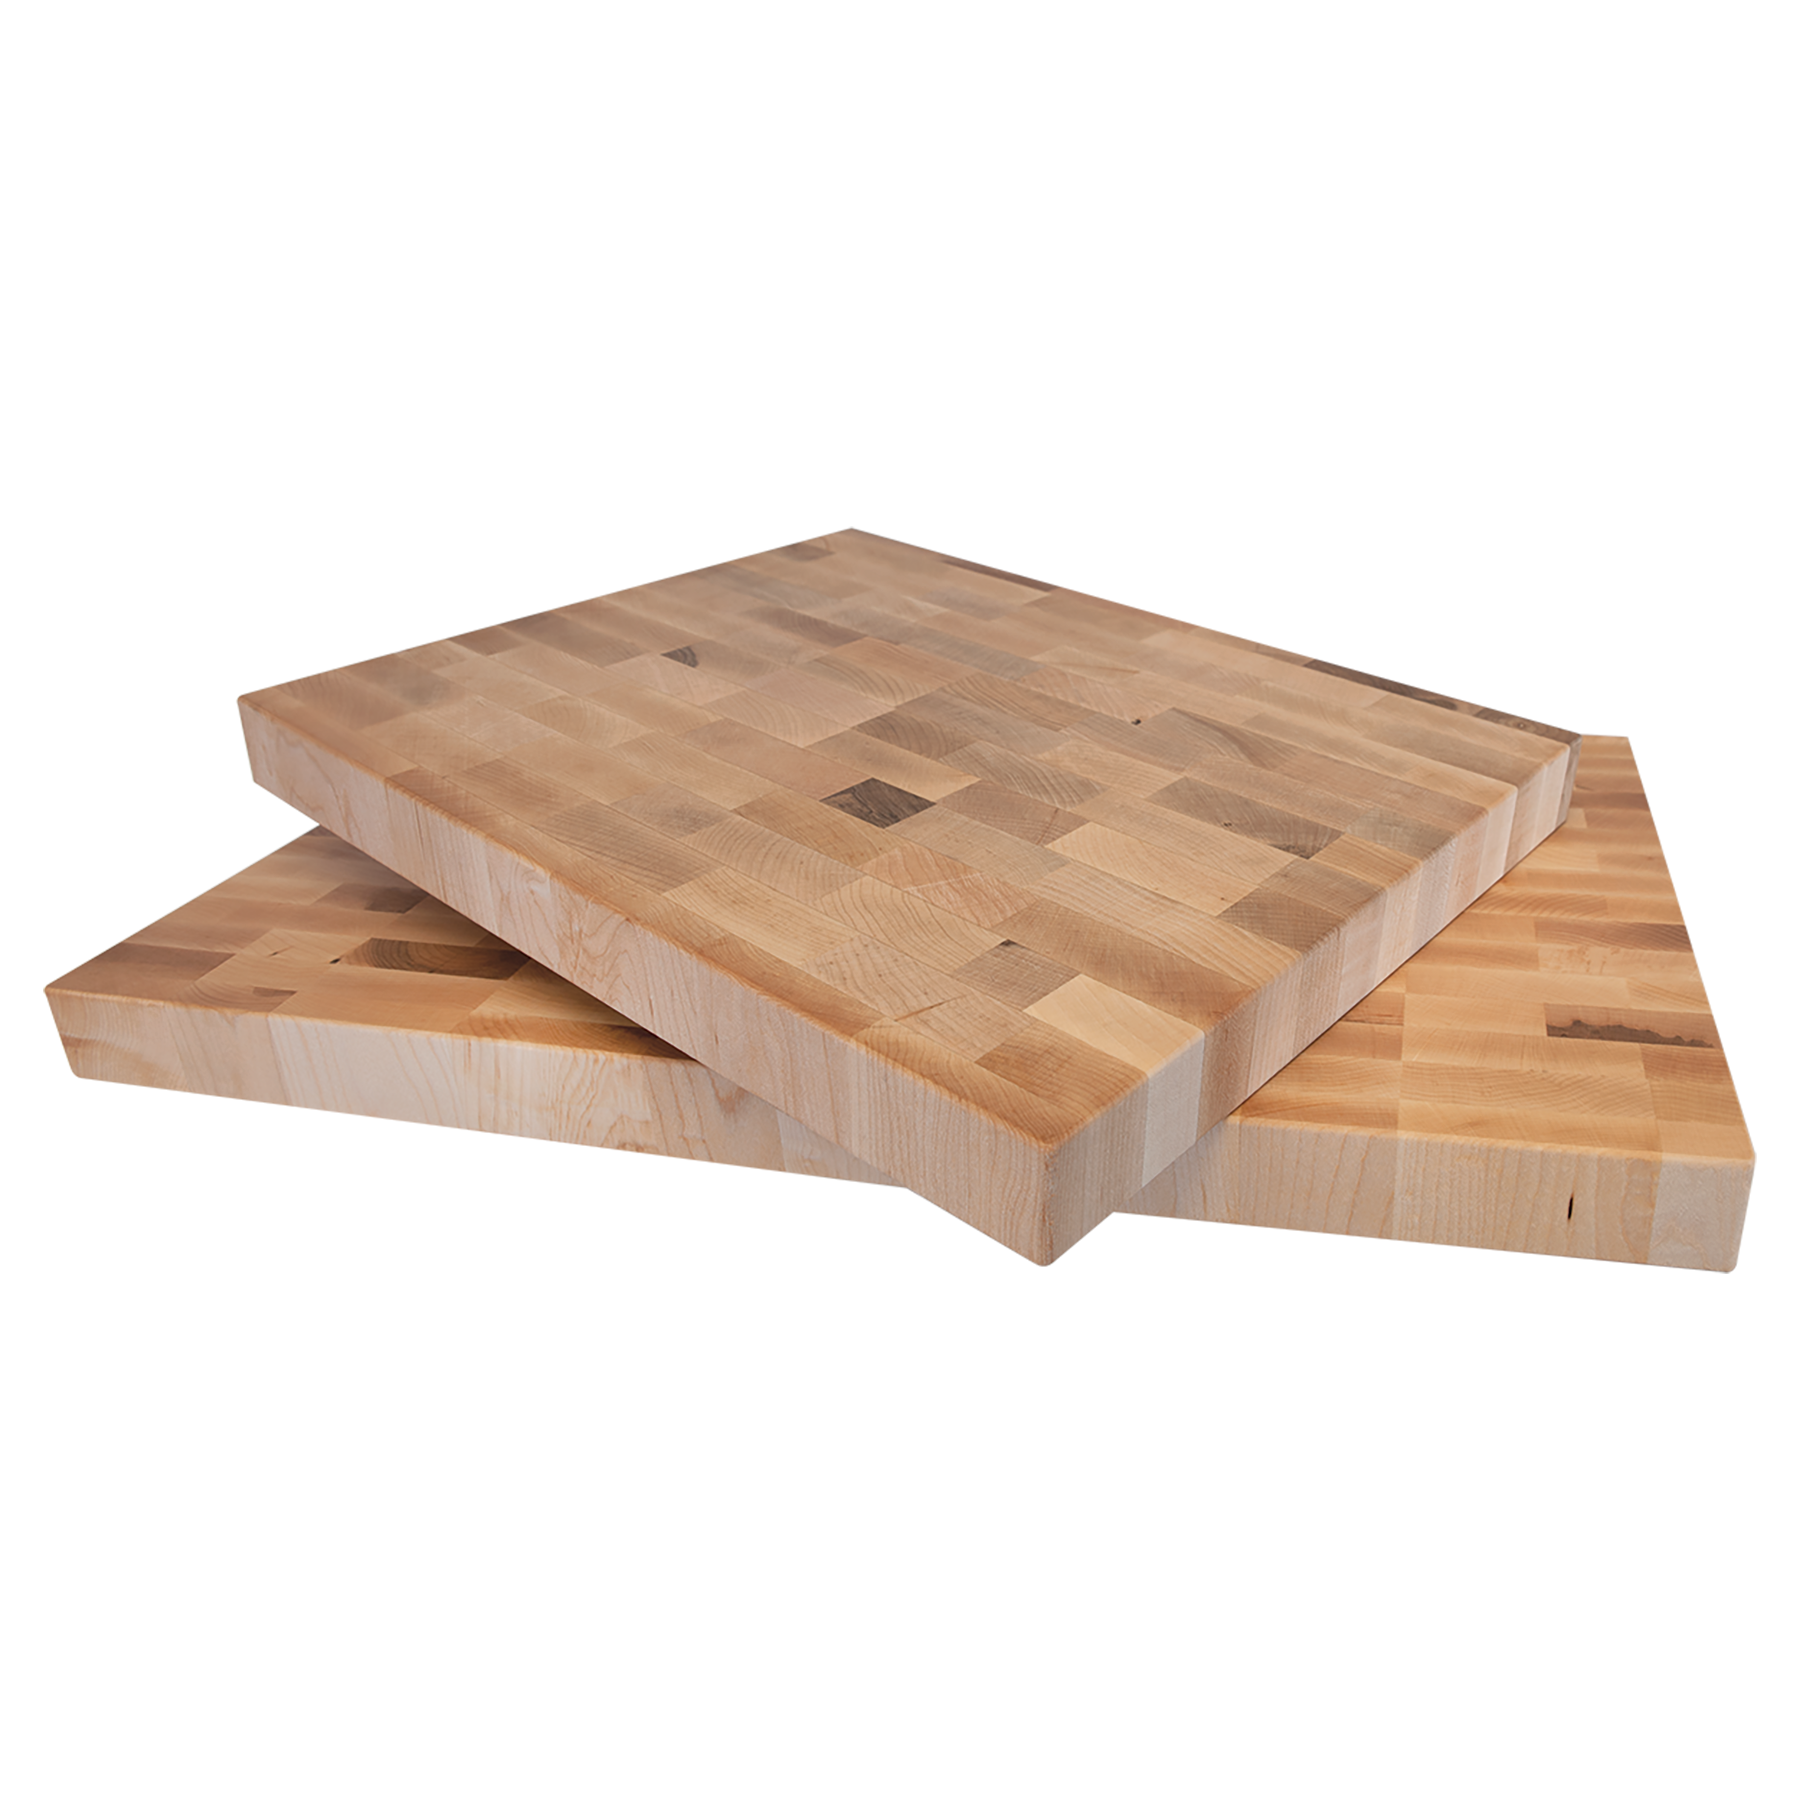 22" x 13" x 1 1/2" Maple Butcherblock Cutting Board